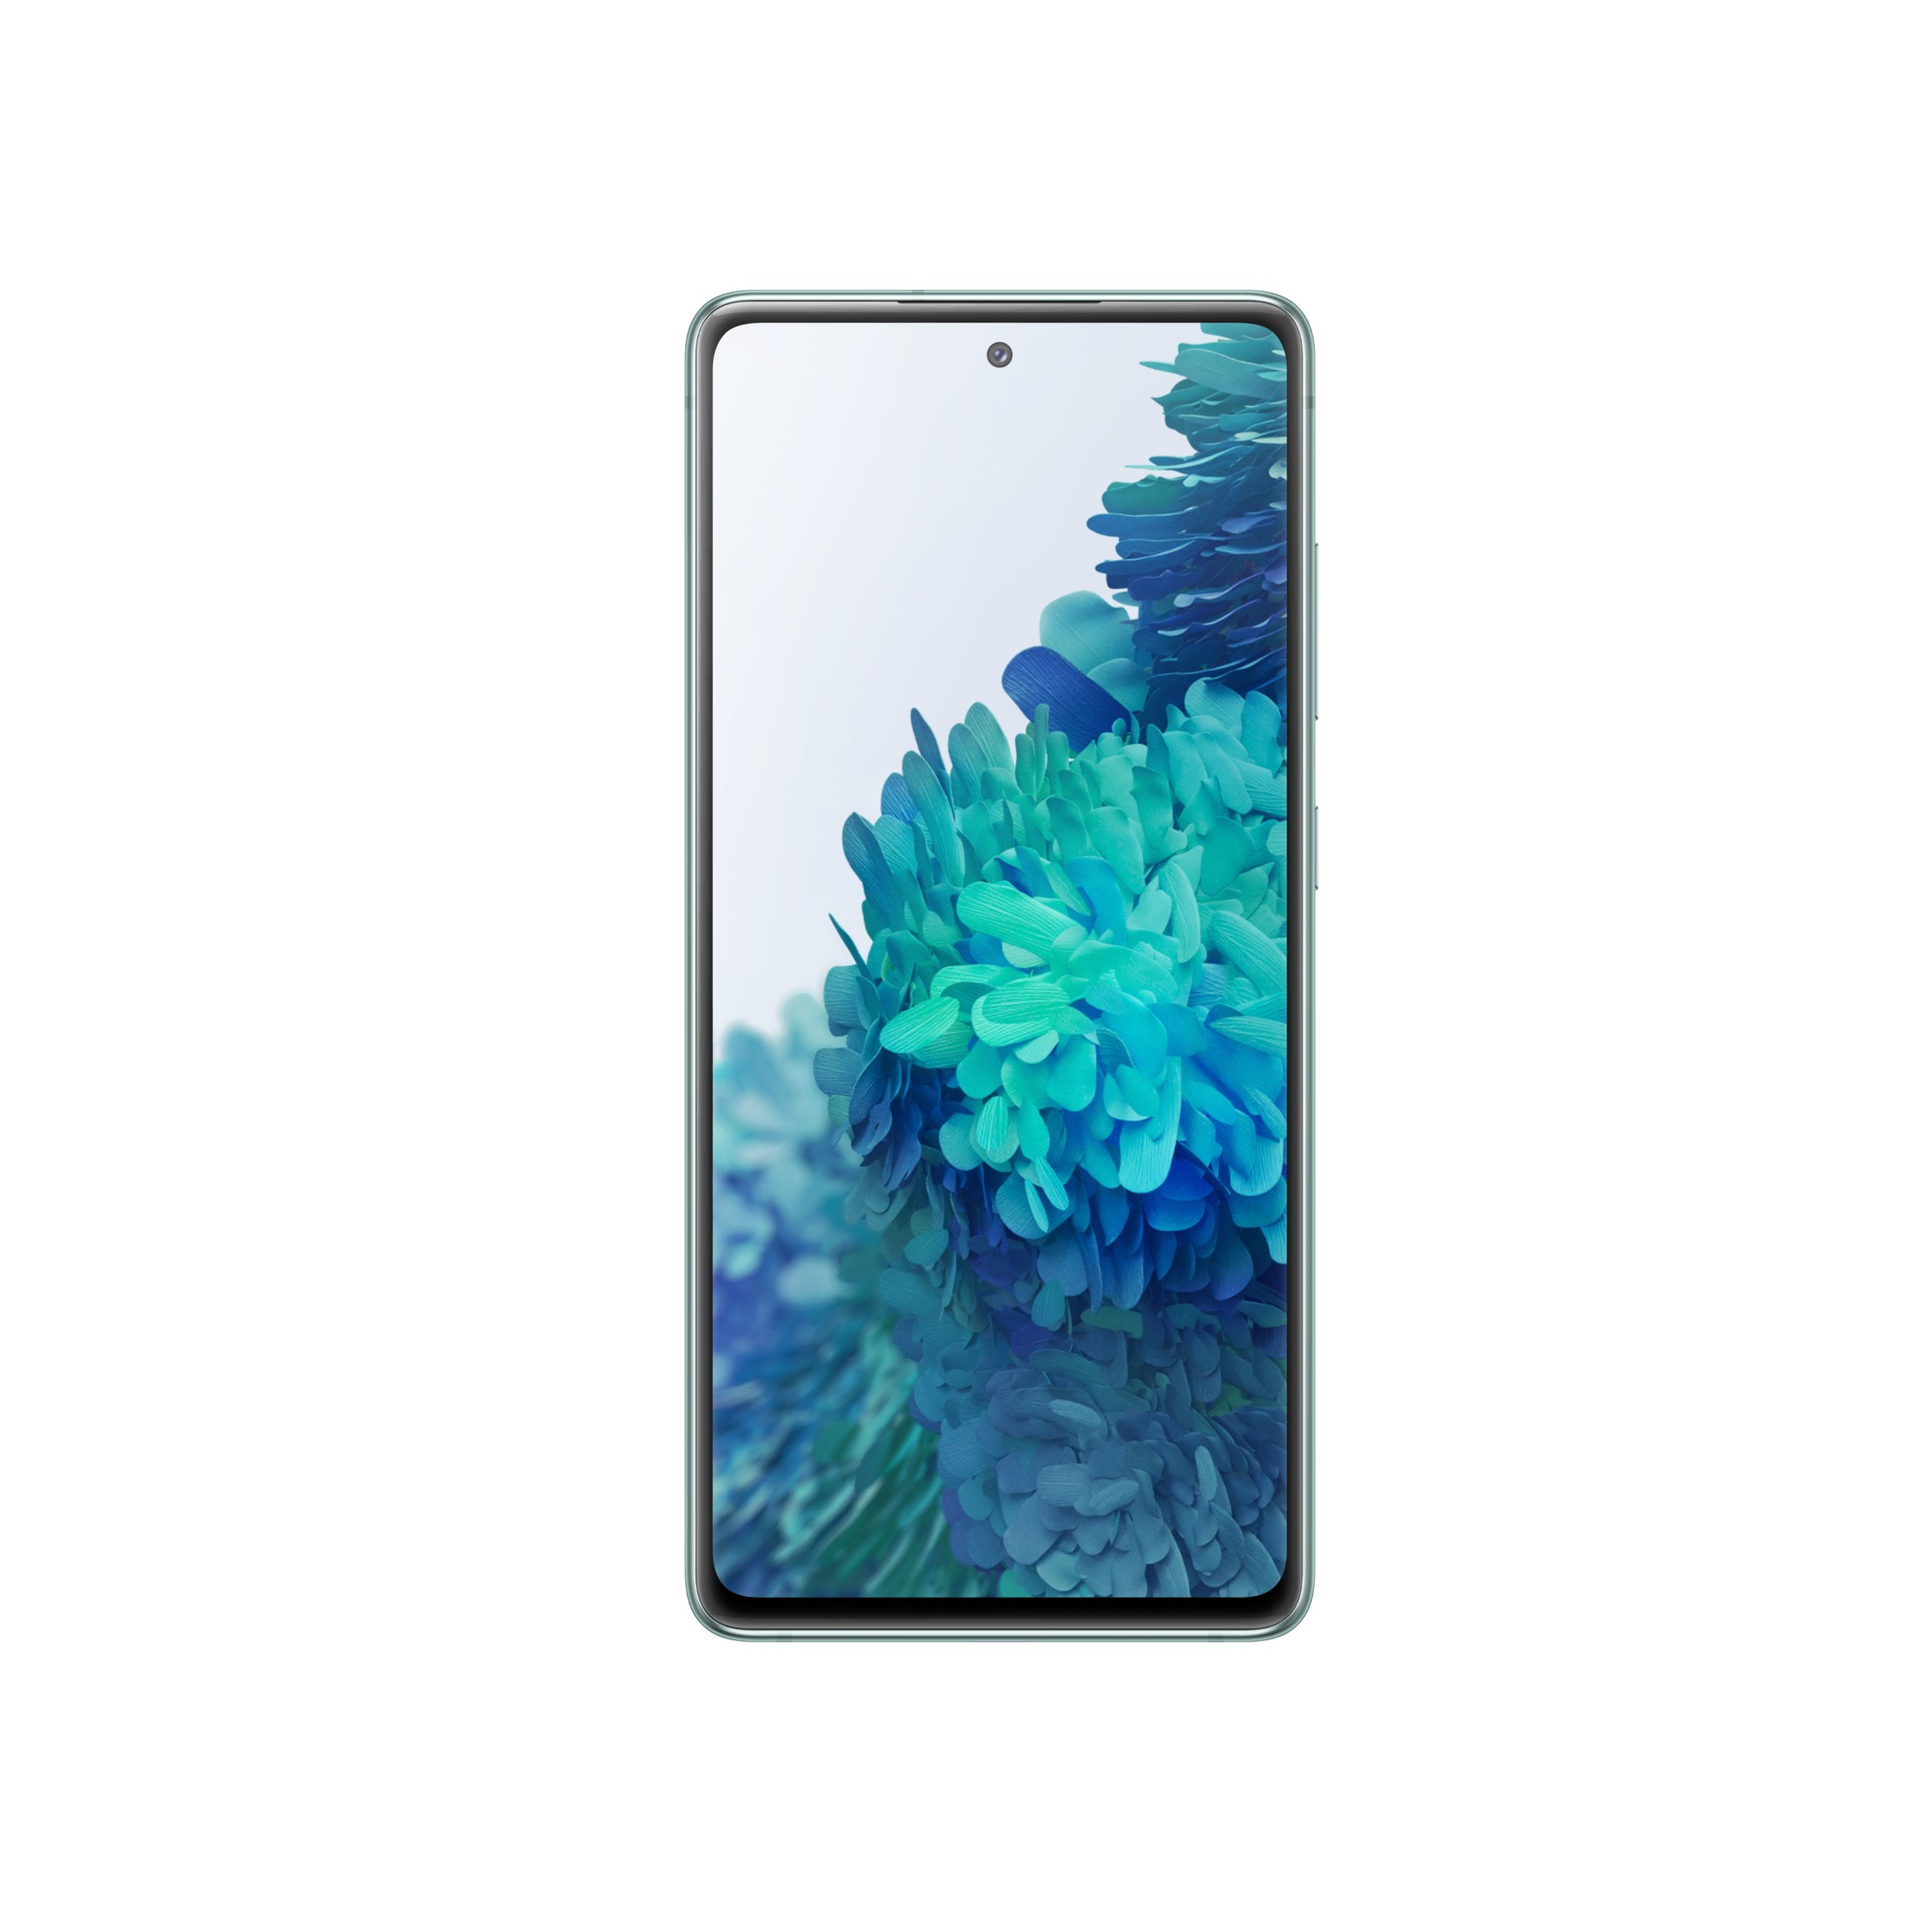 SAMSUNG Galaxy S20 FE 128GB Yeşil Android Telefon Modelleri